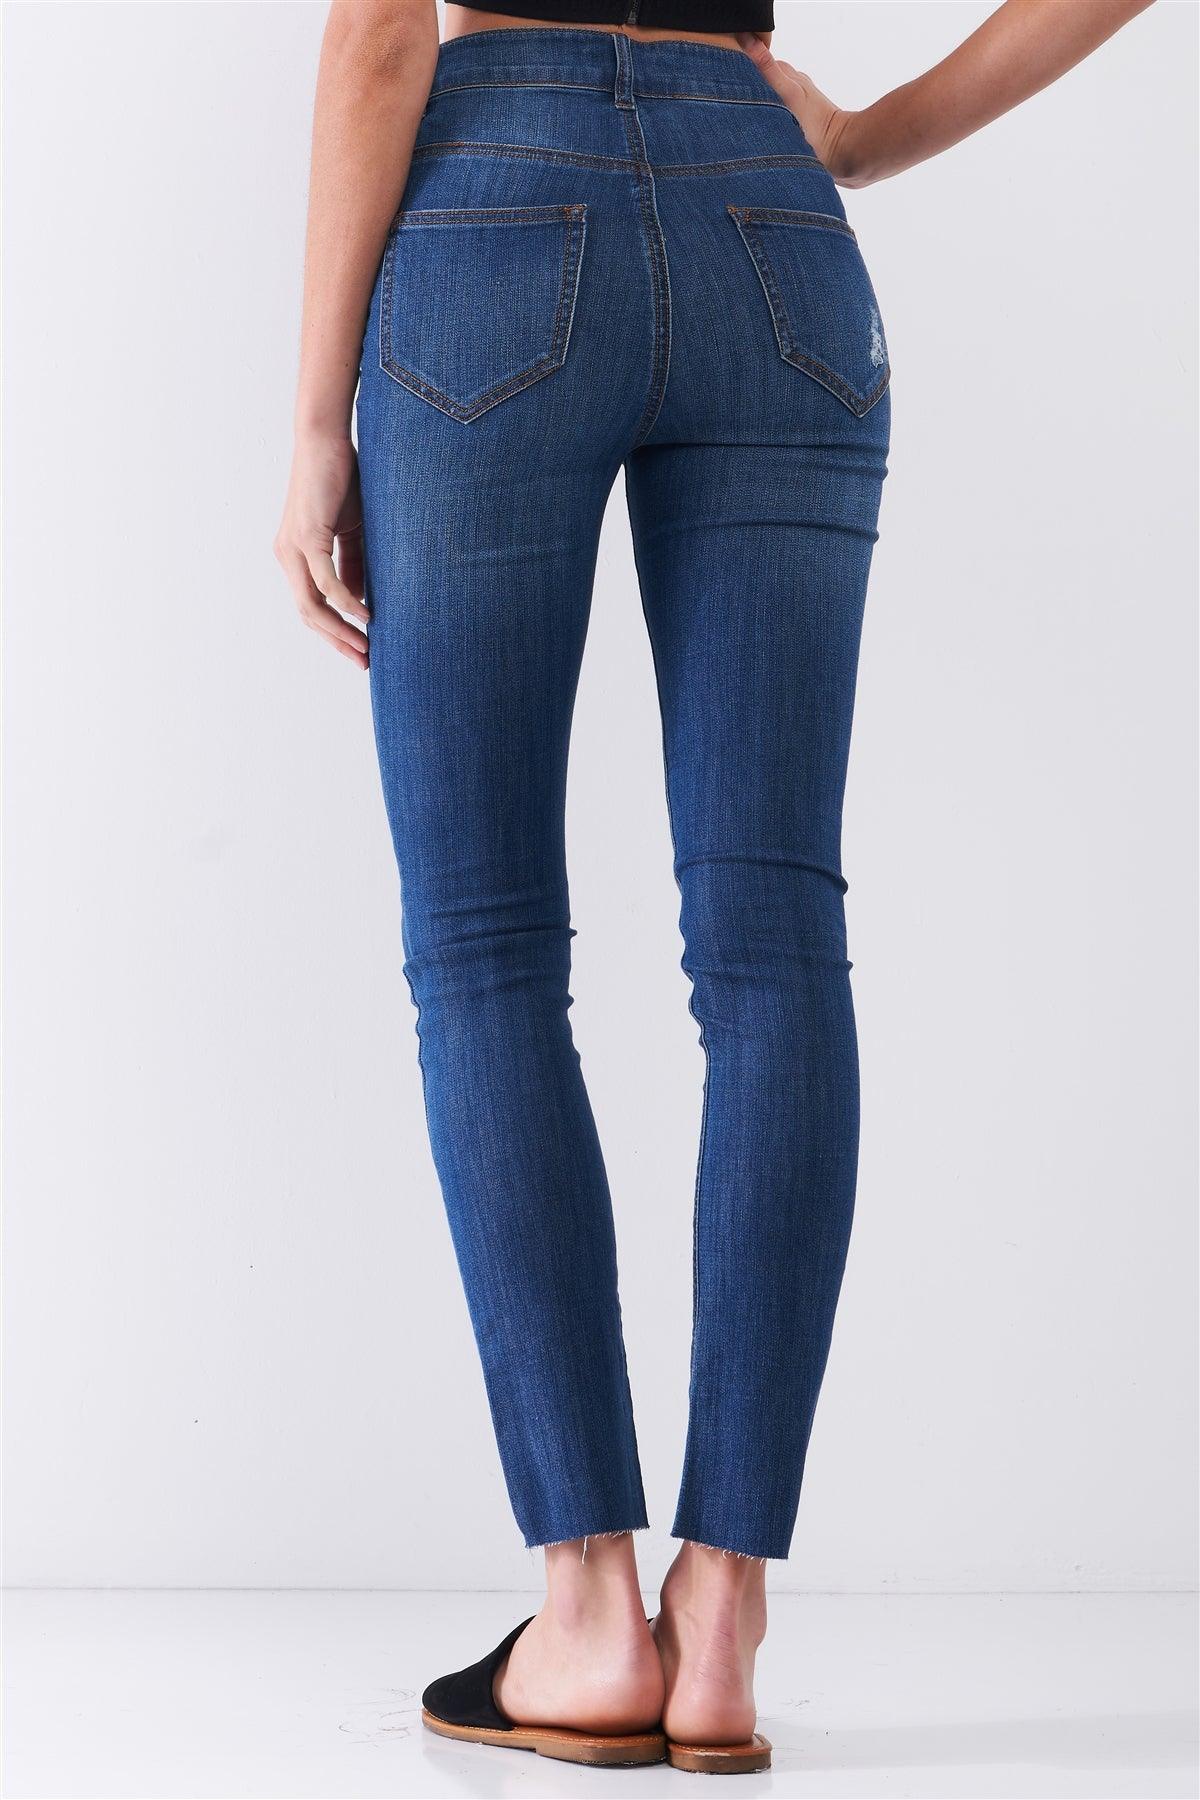 Medium Blue Denim Mid-Rise Ripped Detail Skinny Jean Pants /3-2-1